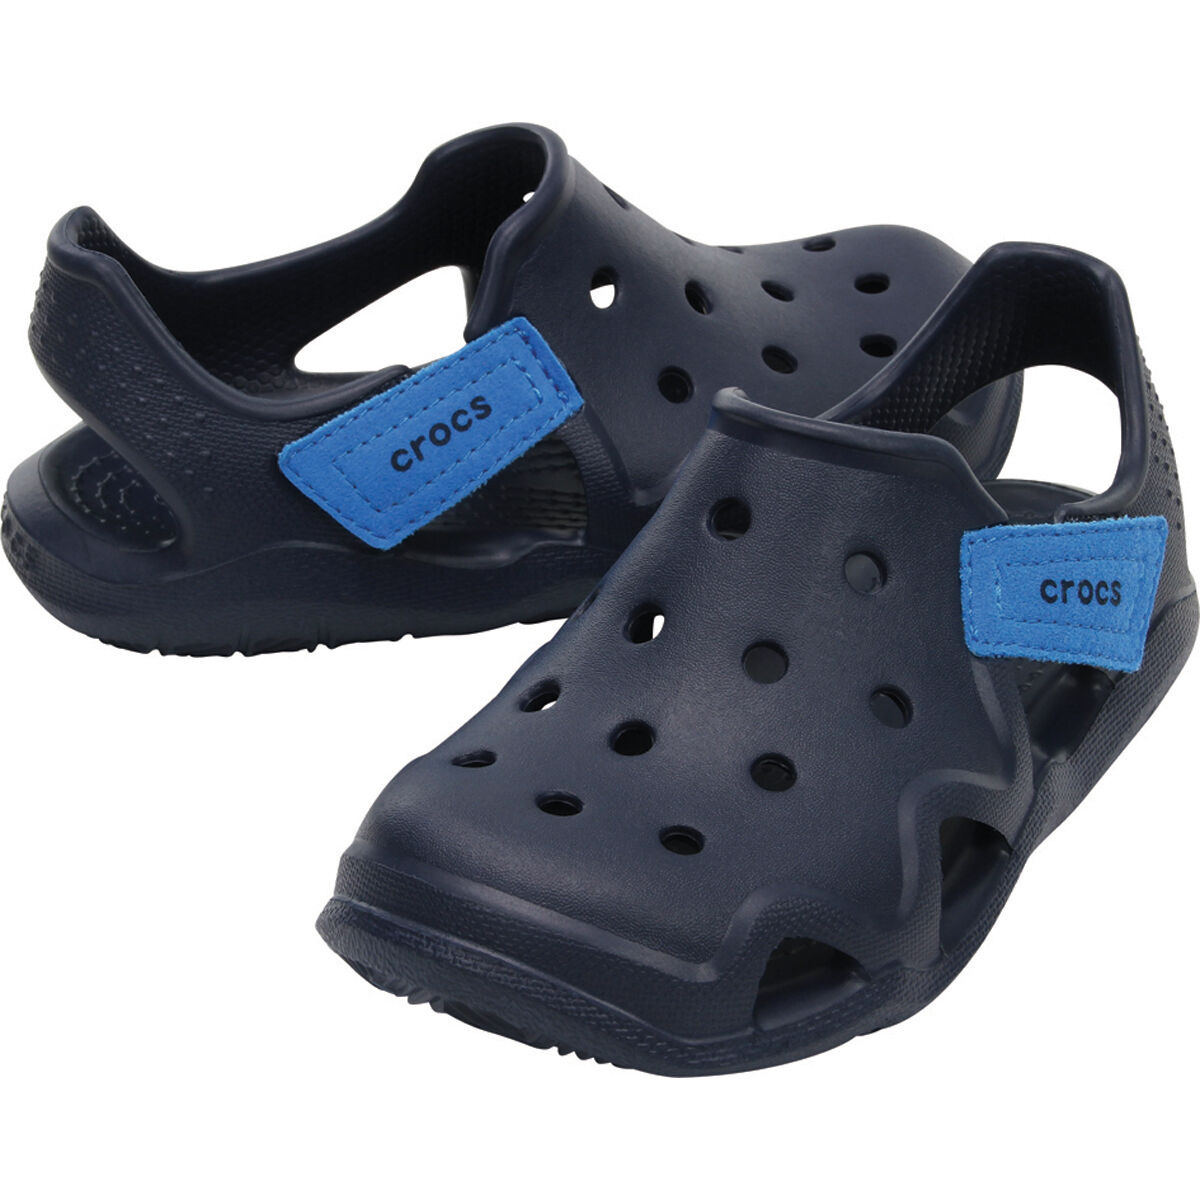 crocs swiftwater toddler